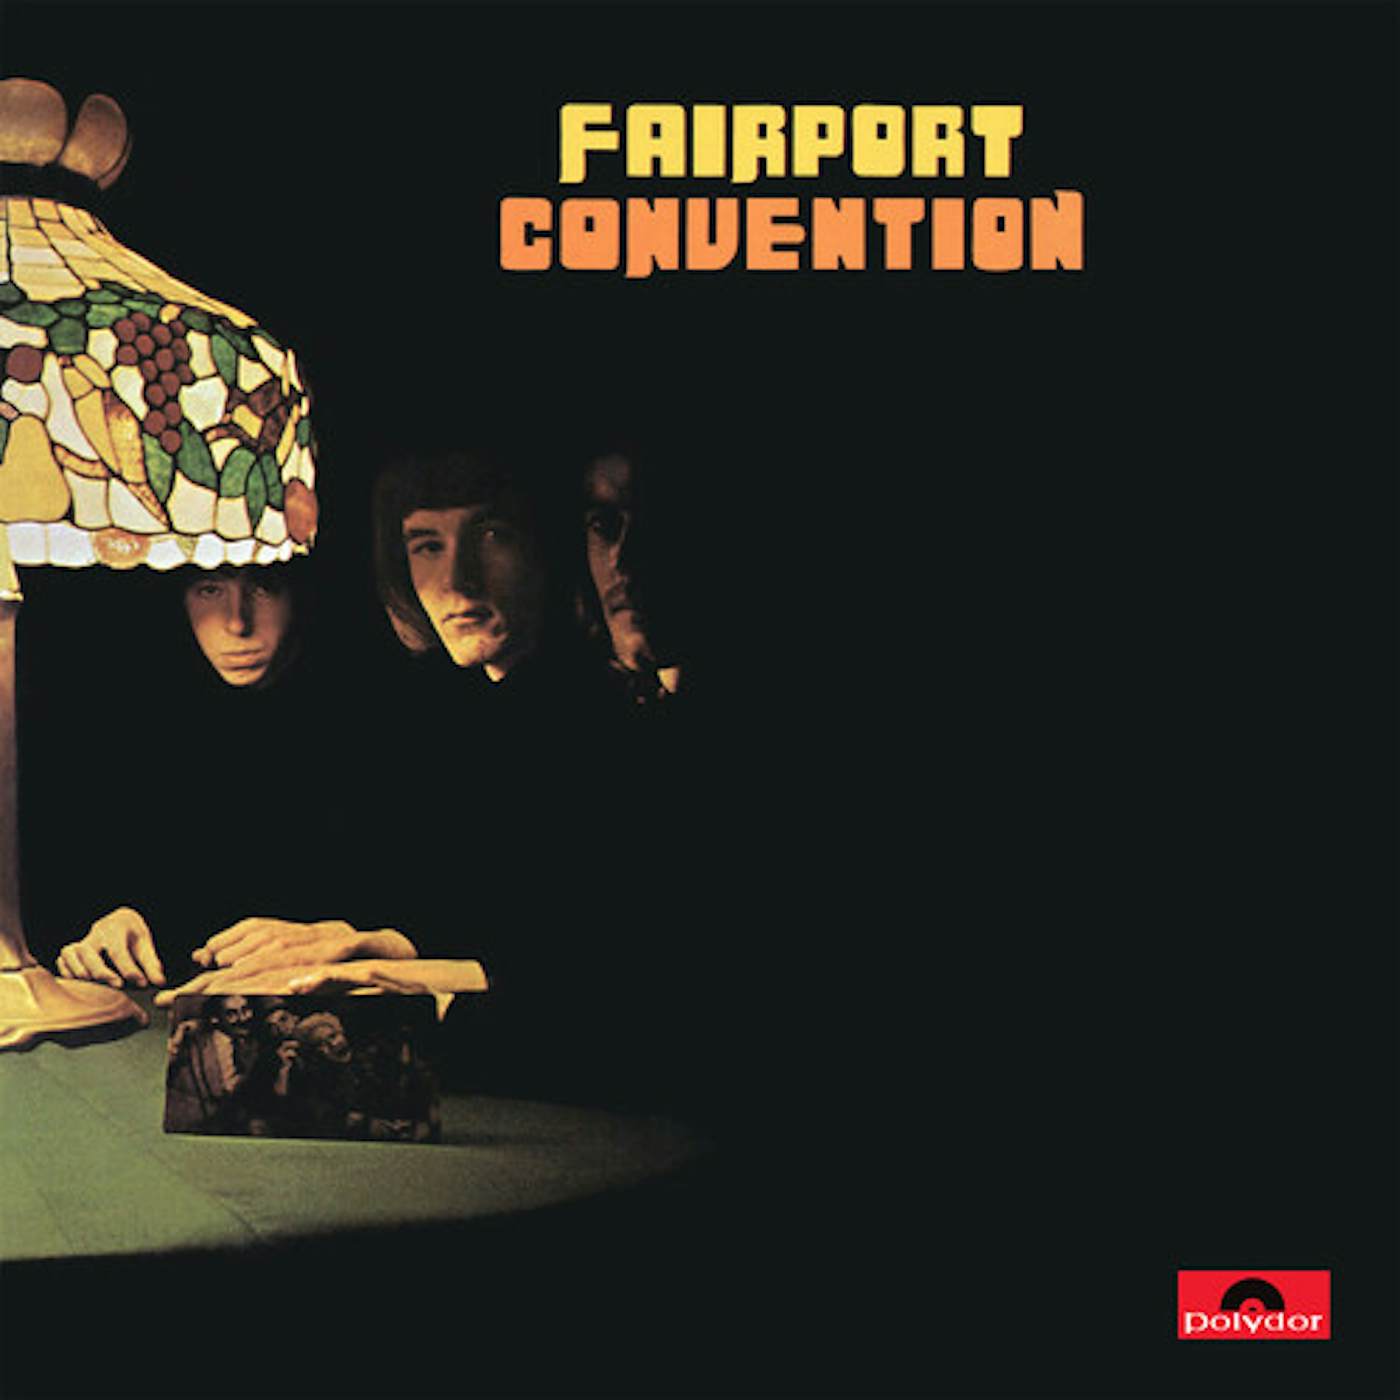 Fairport Convention Vinyl Record